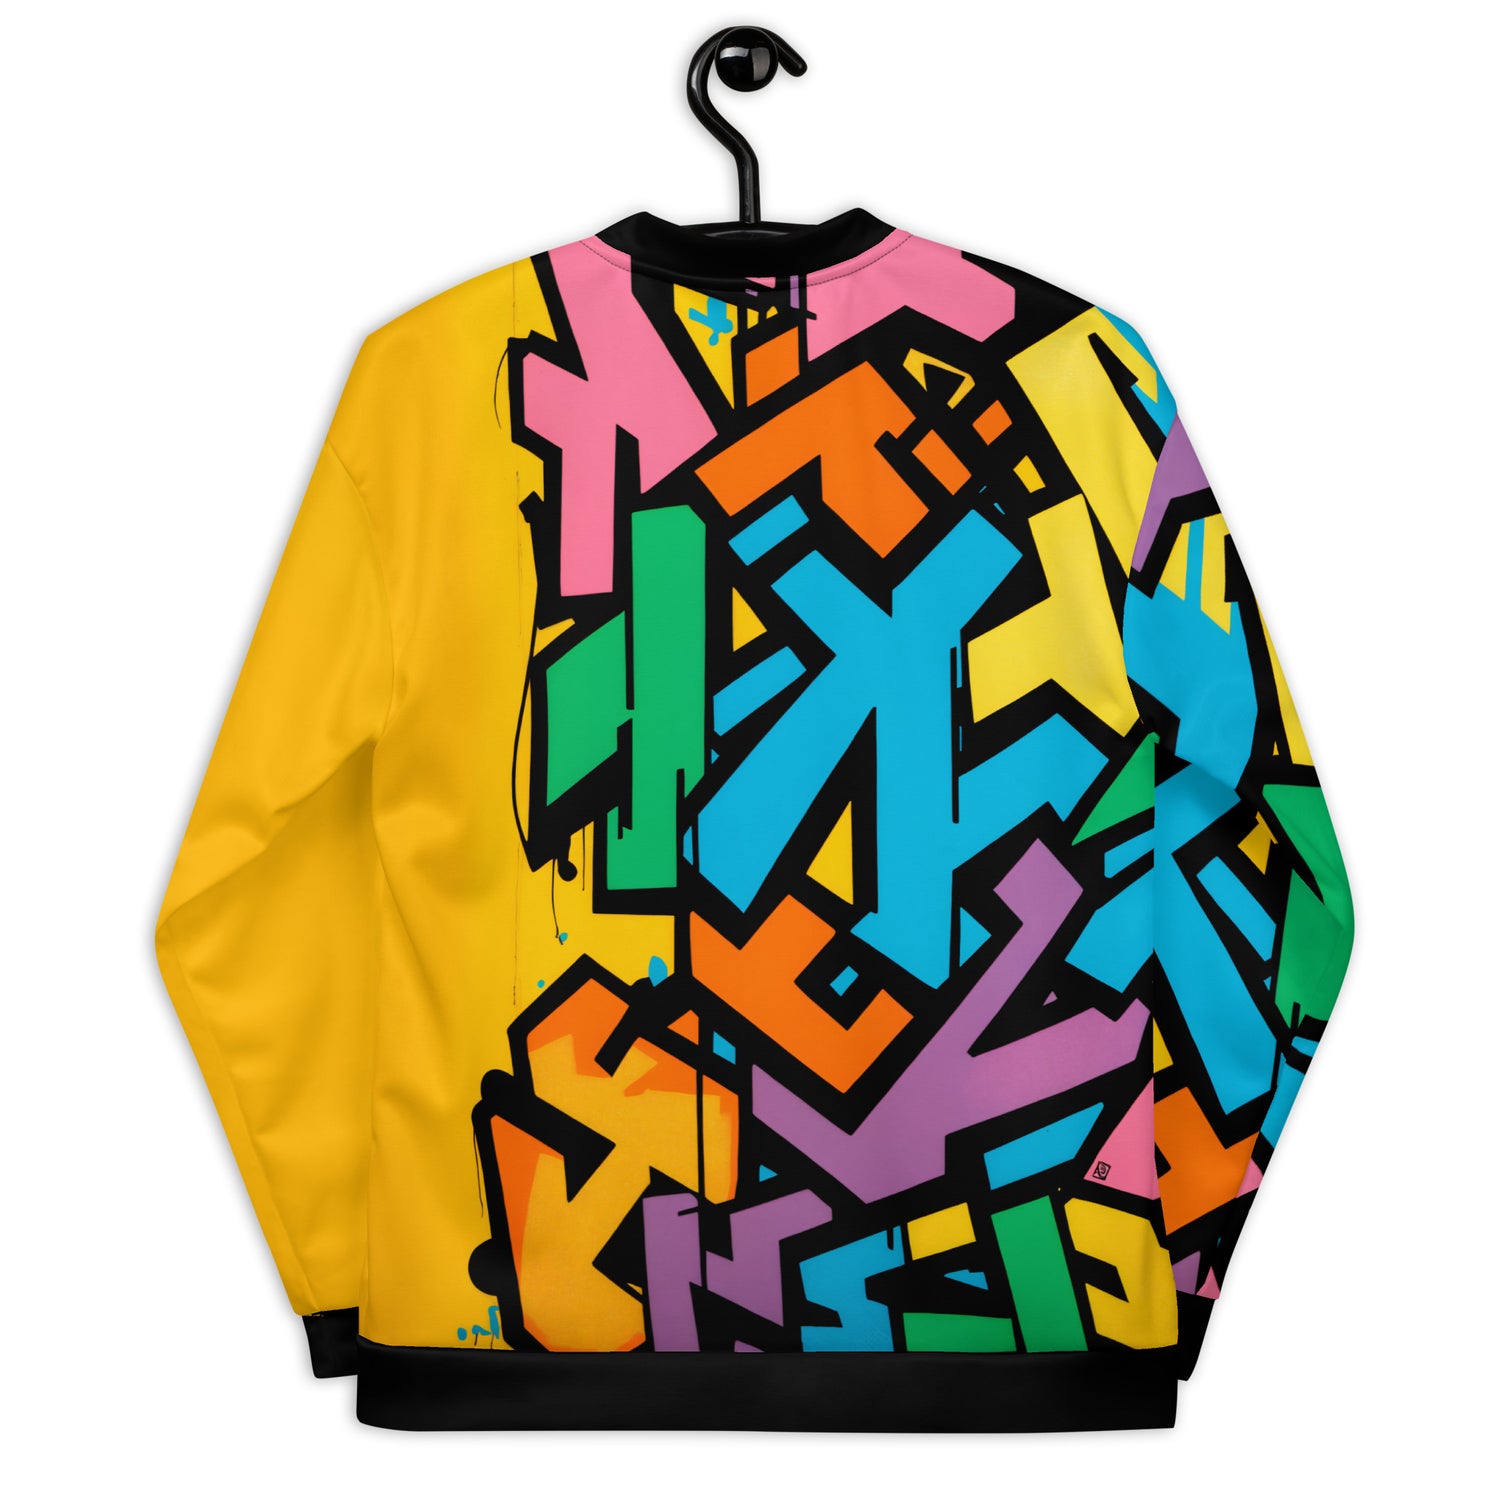 Men's Urban Graffiti Bomber Jacket, colorful street art design, bold urban outerwear, vibrant graffiti pattern.